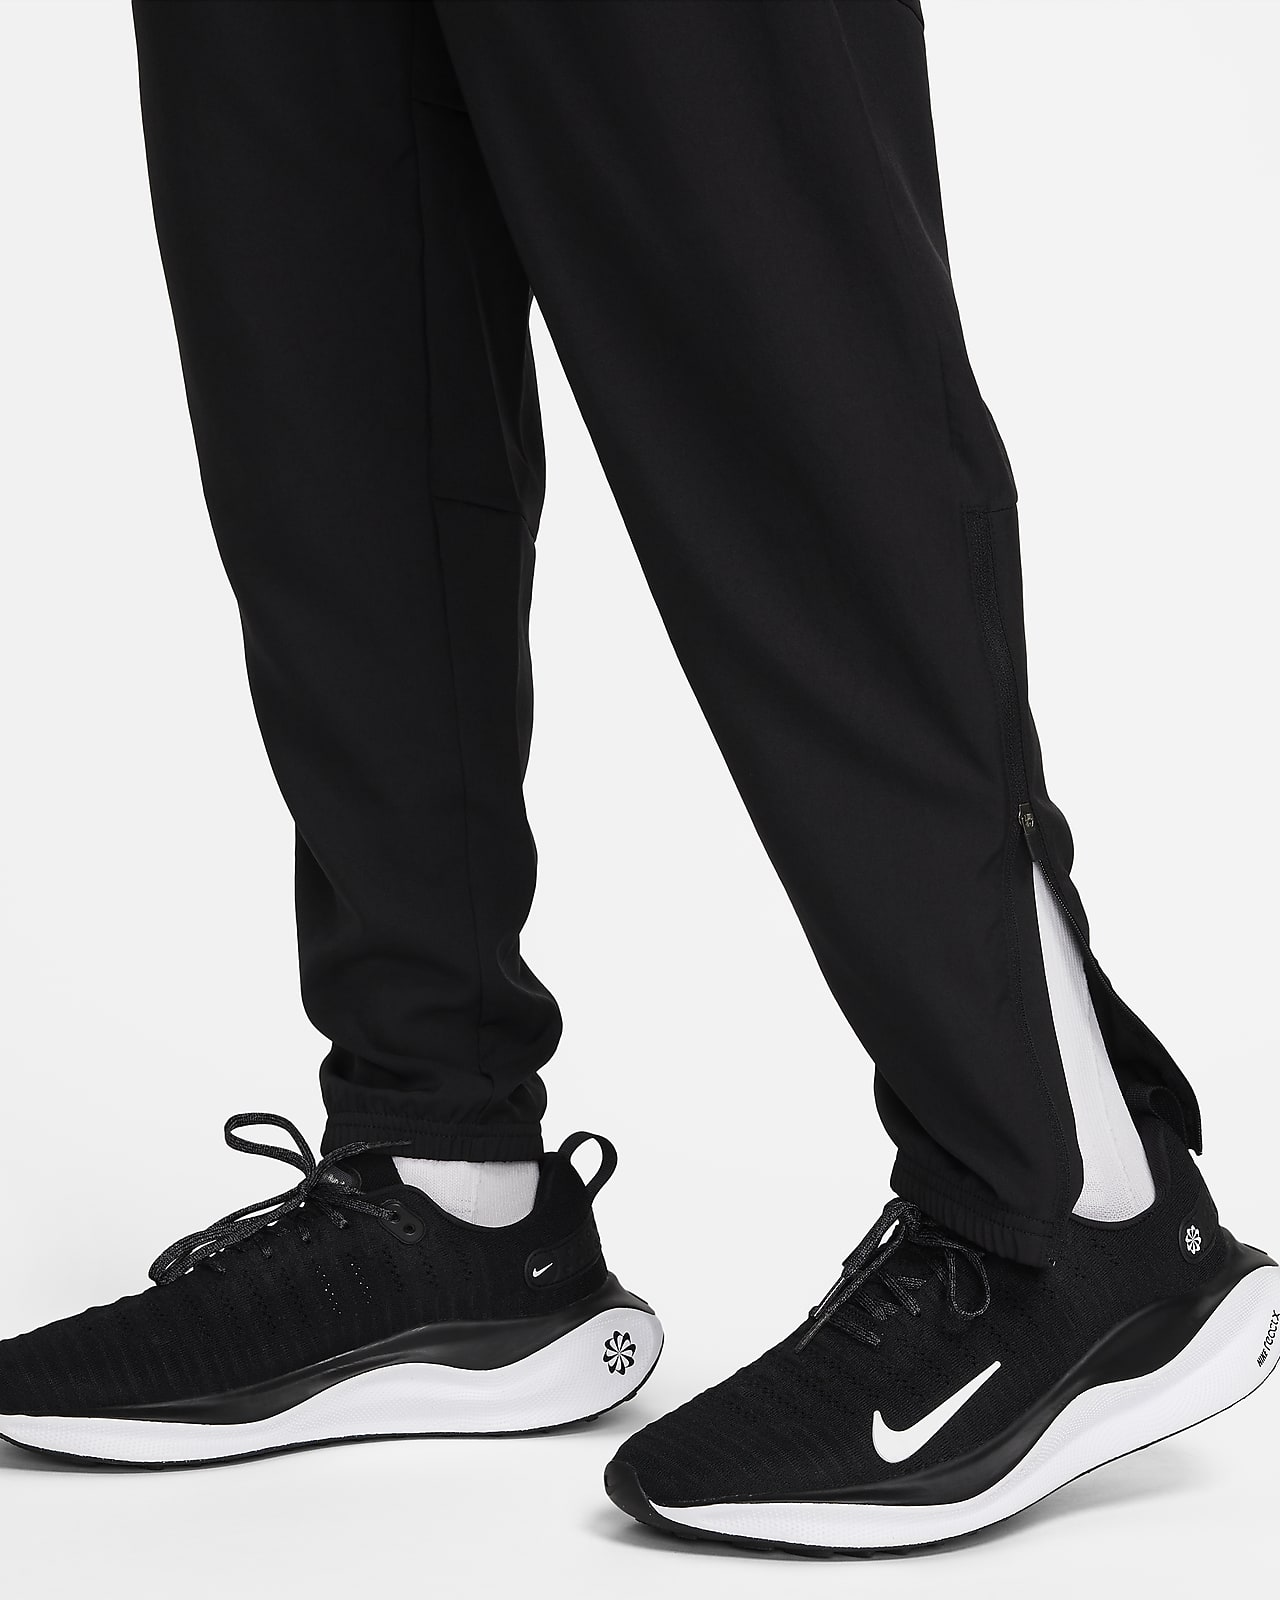 Nike Power Training Pant - black/white, Tennis Zone